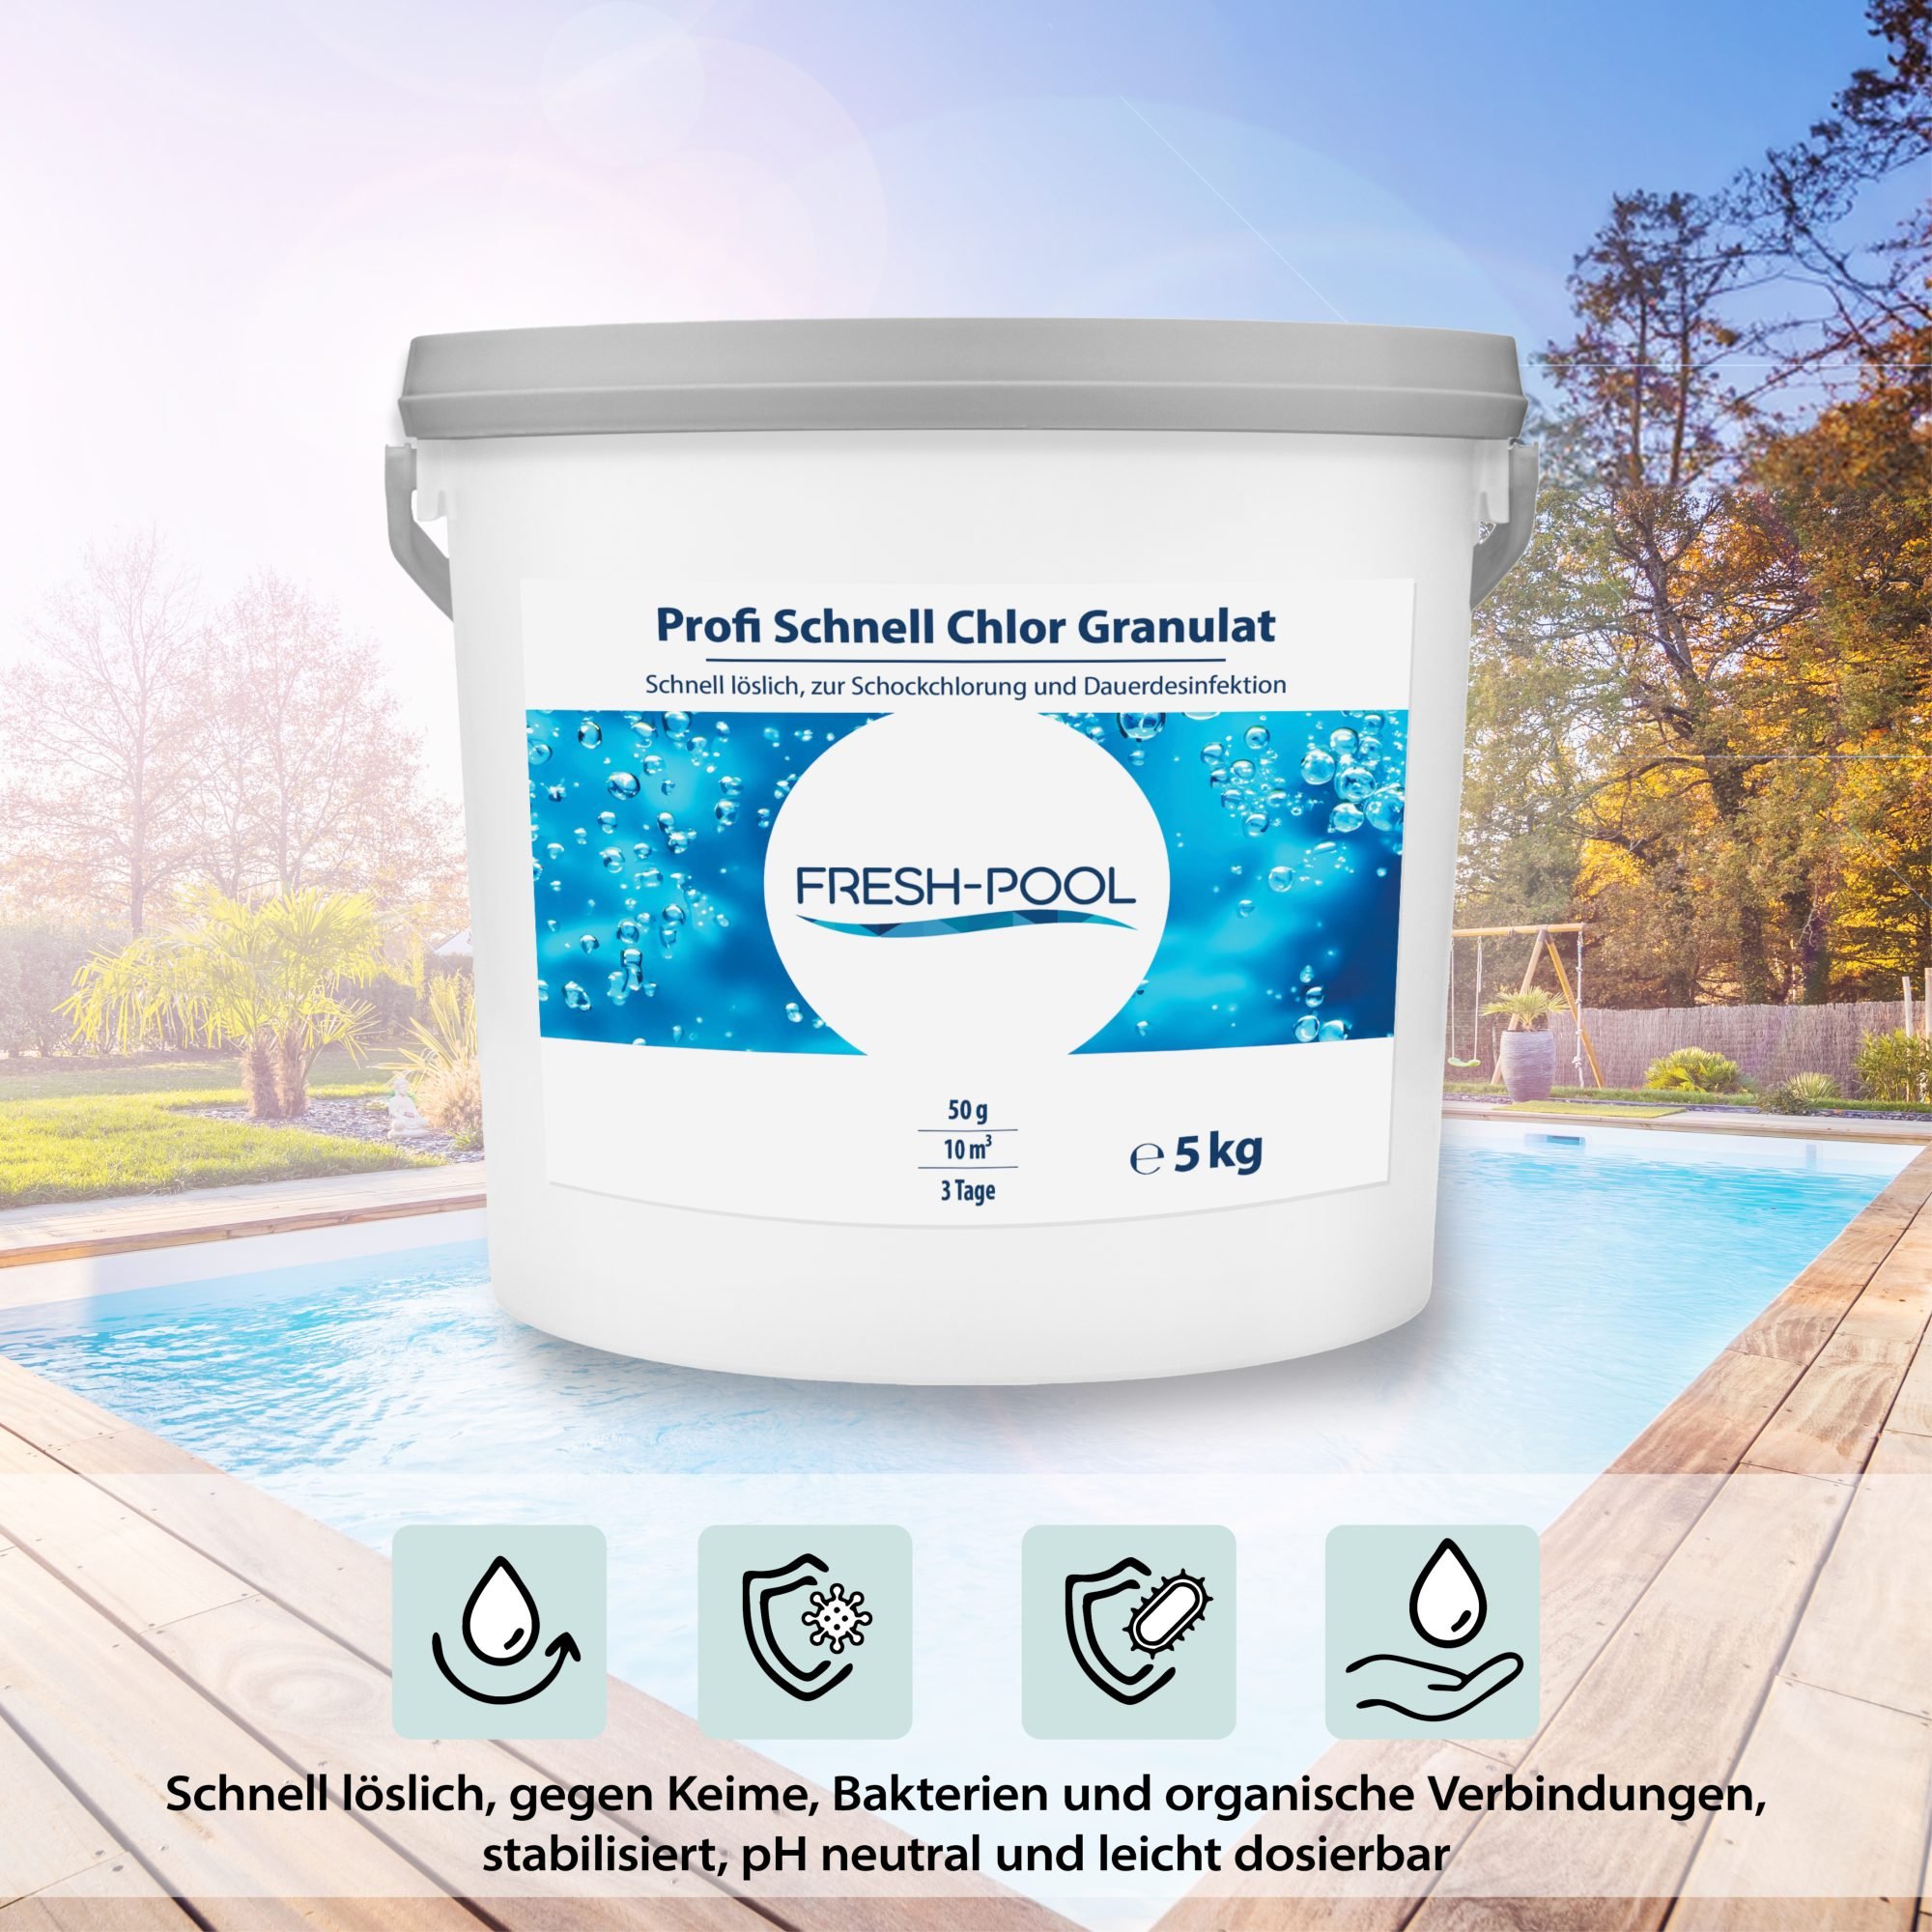 Fresh-Pool Profi Schnell Chlor Granulat 5 kg incl. Dosierbecher